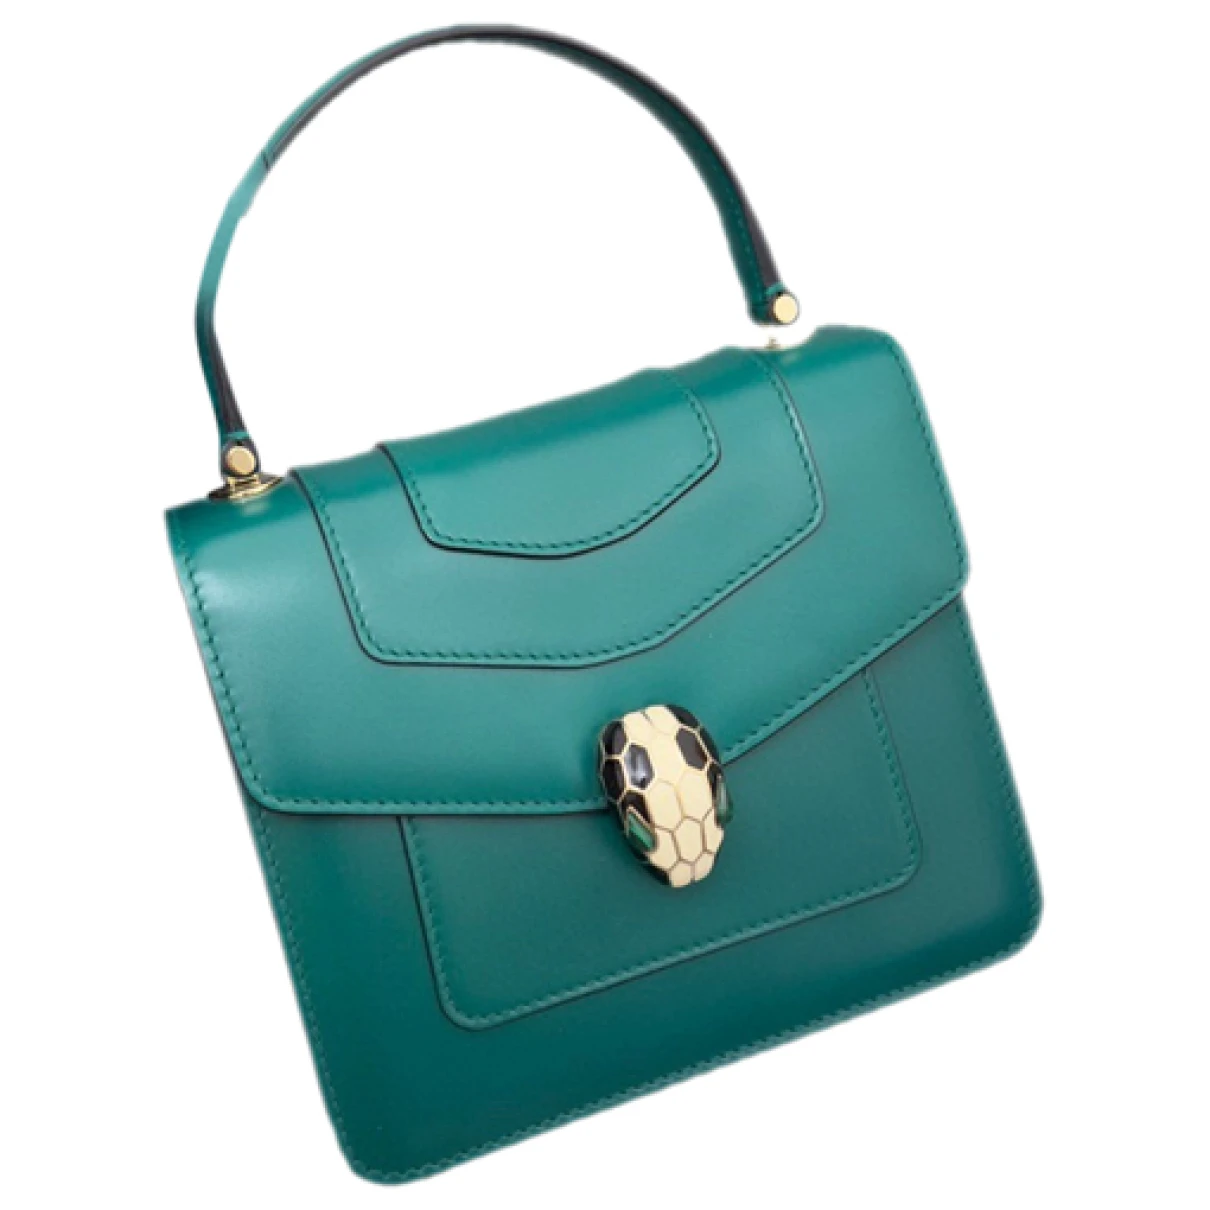 Pre-owned Bvlgari Serpenti Leather Handbag In Green